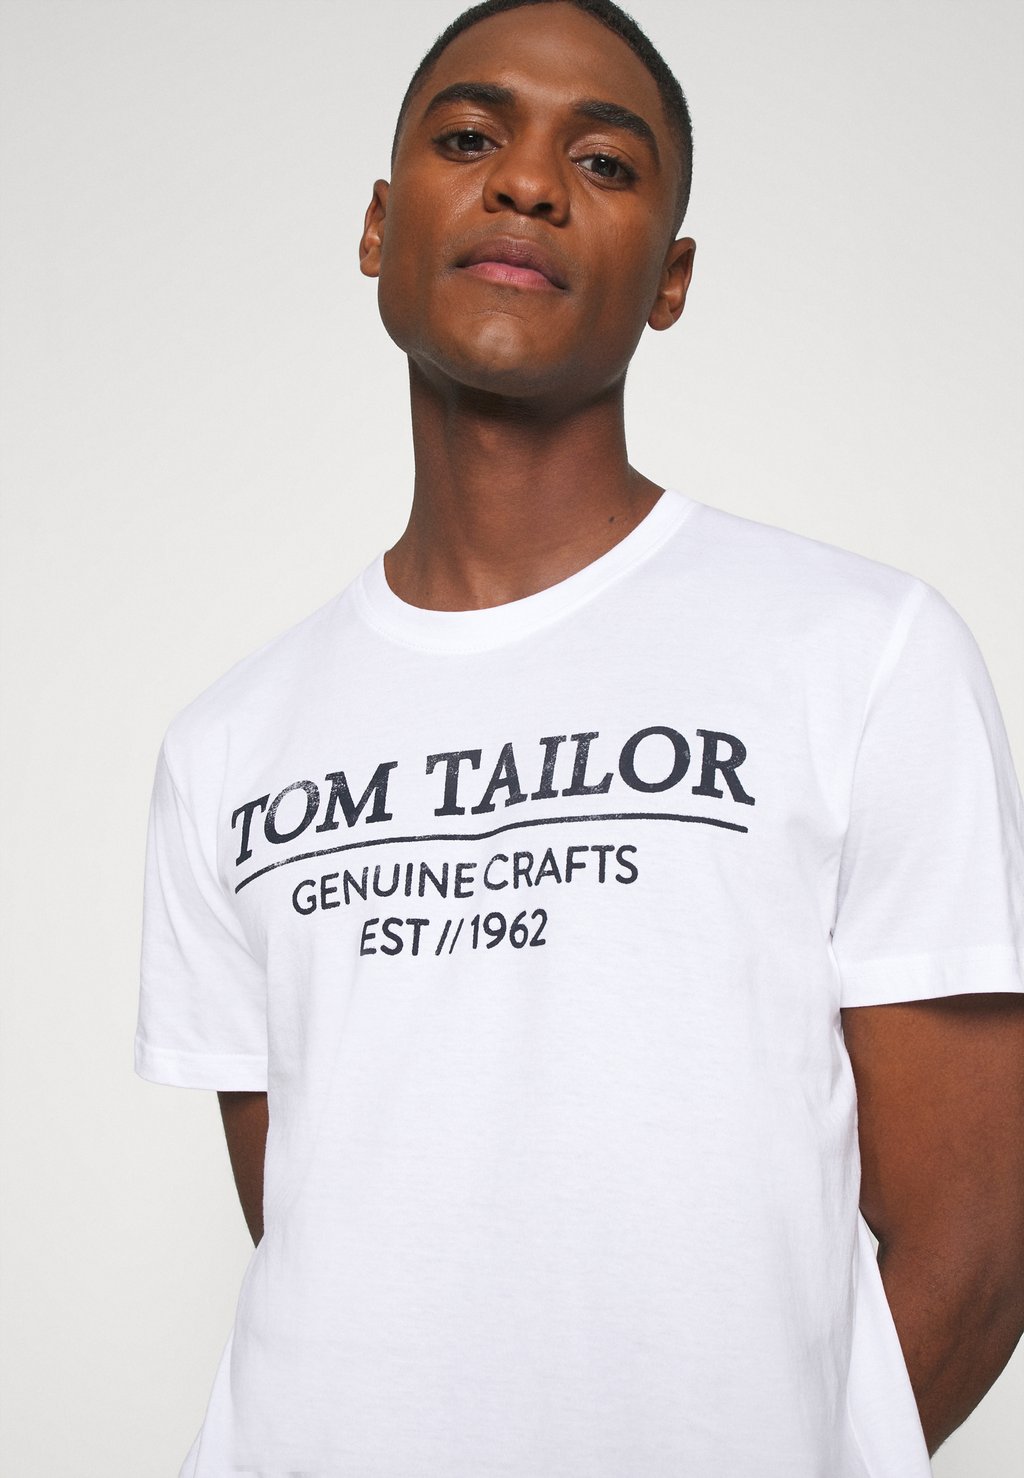 Тейлор бел. Authentic Design Pure quality 1962 established Tom Tailor effortless кофта.